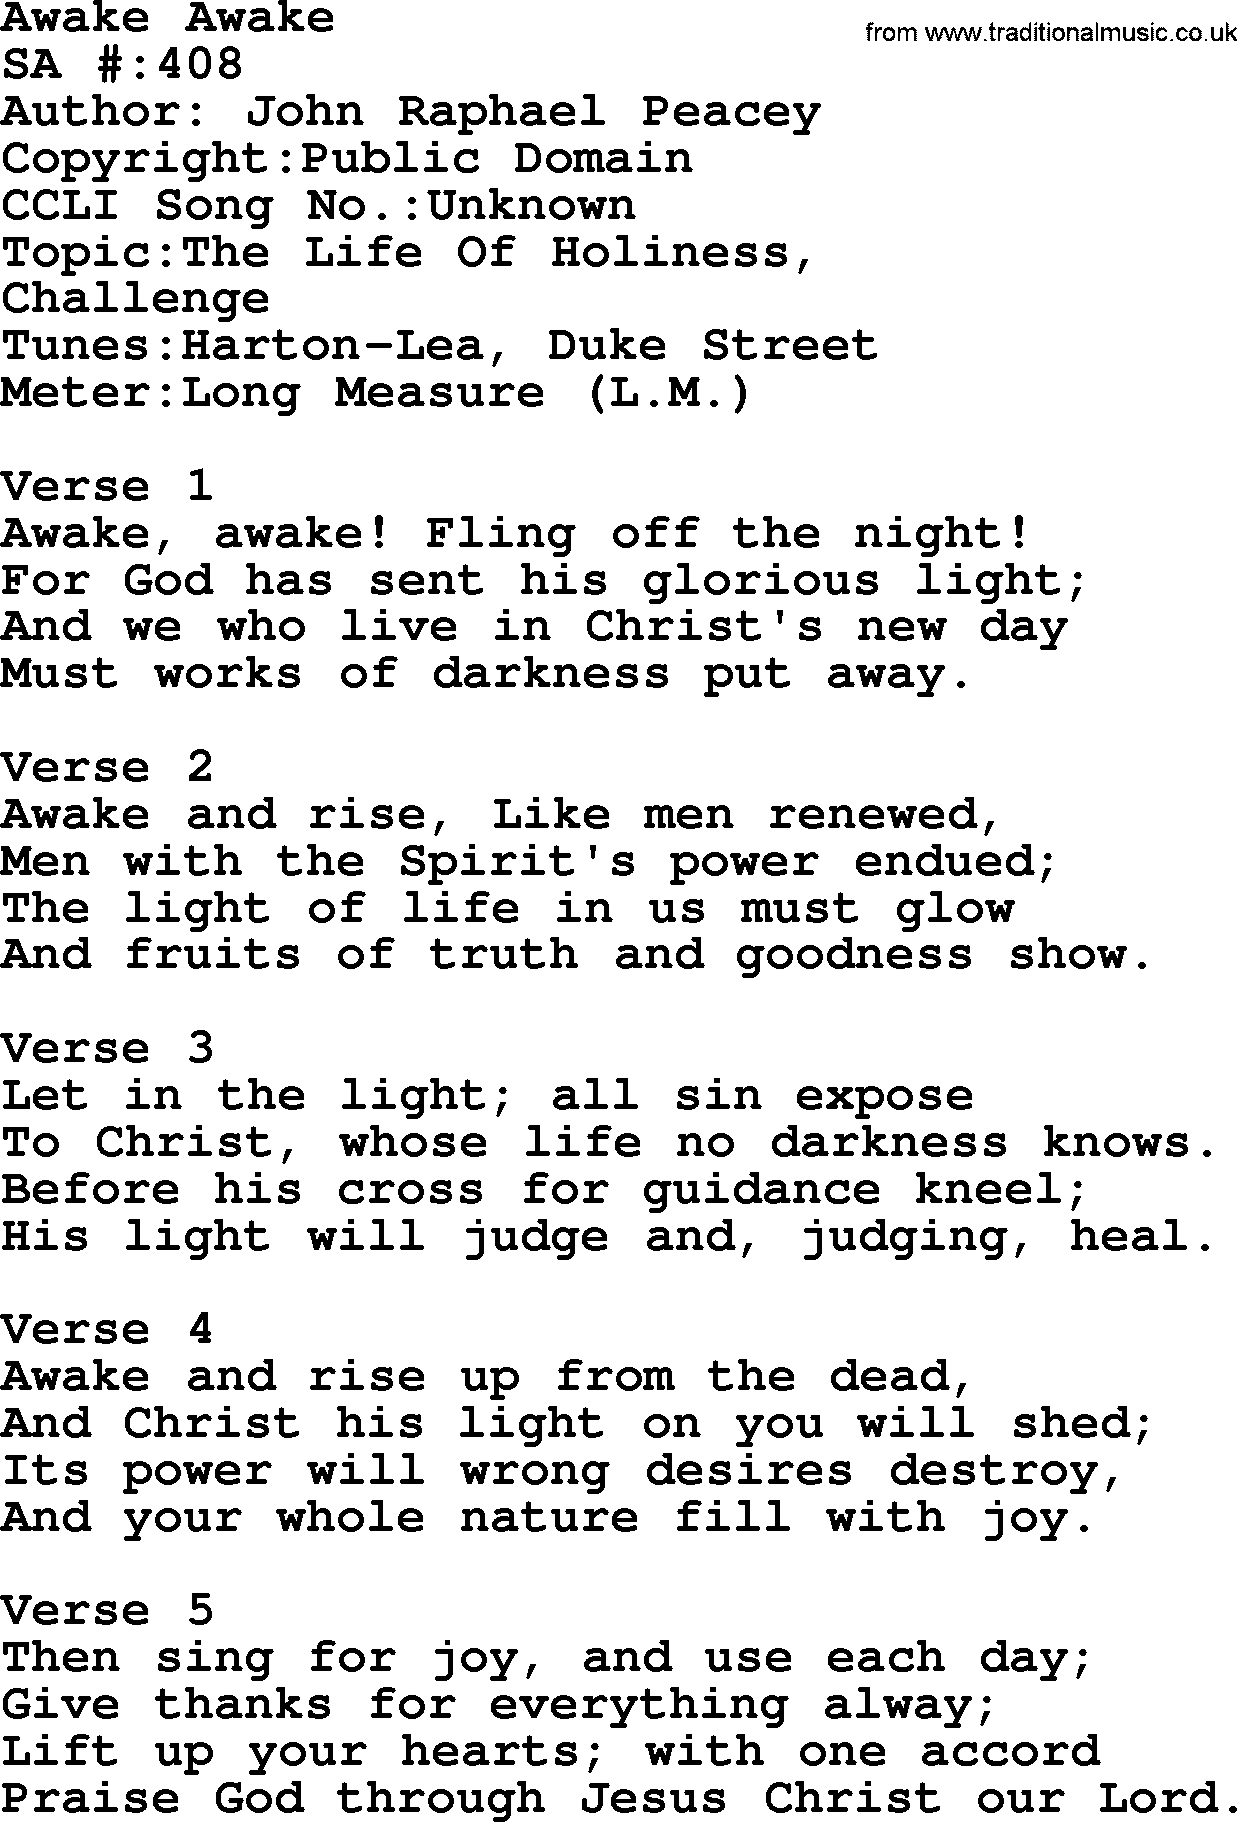 Salvation Army Hymnal, title: Awake Awake, with lyrics and PDF,